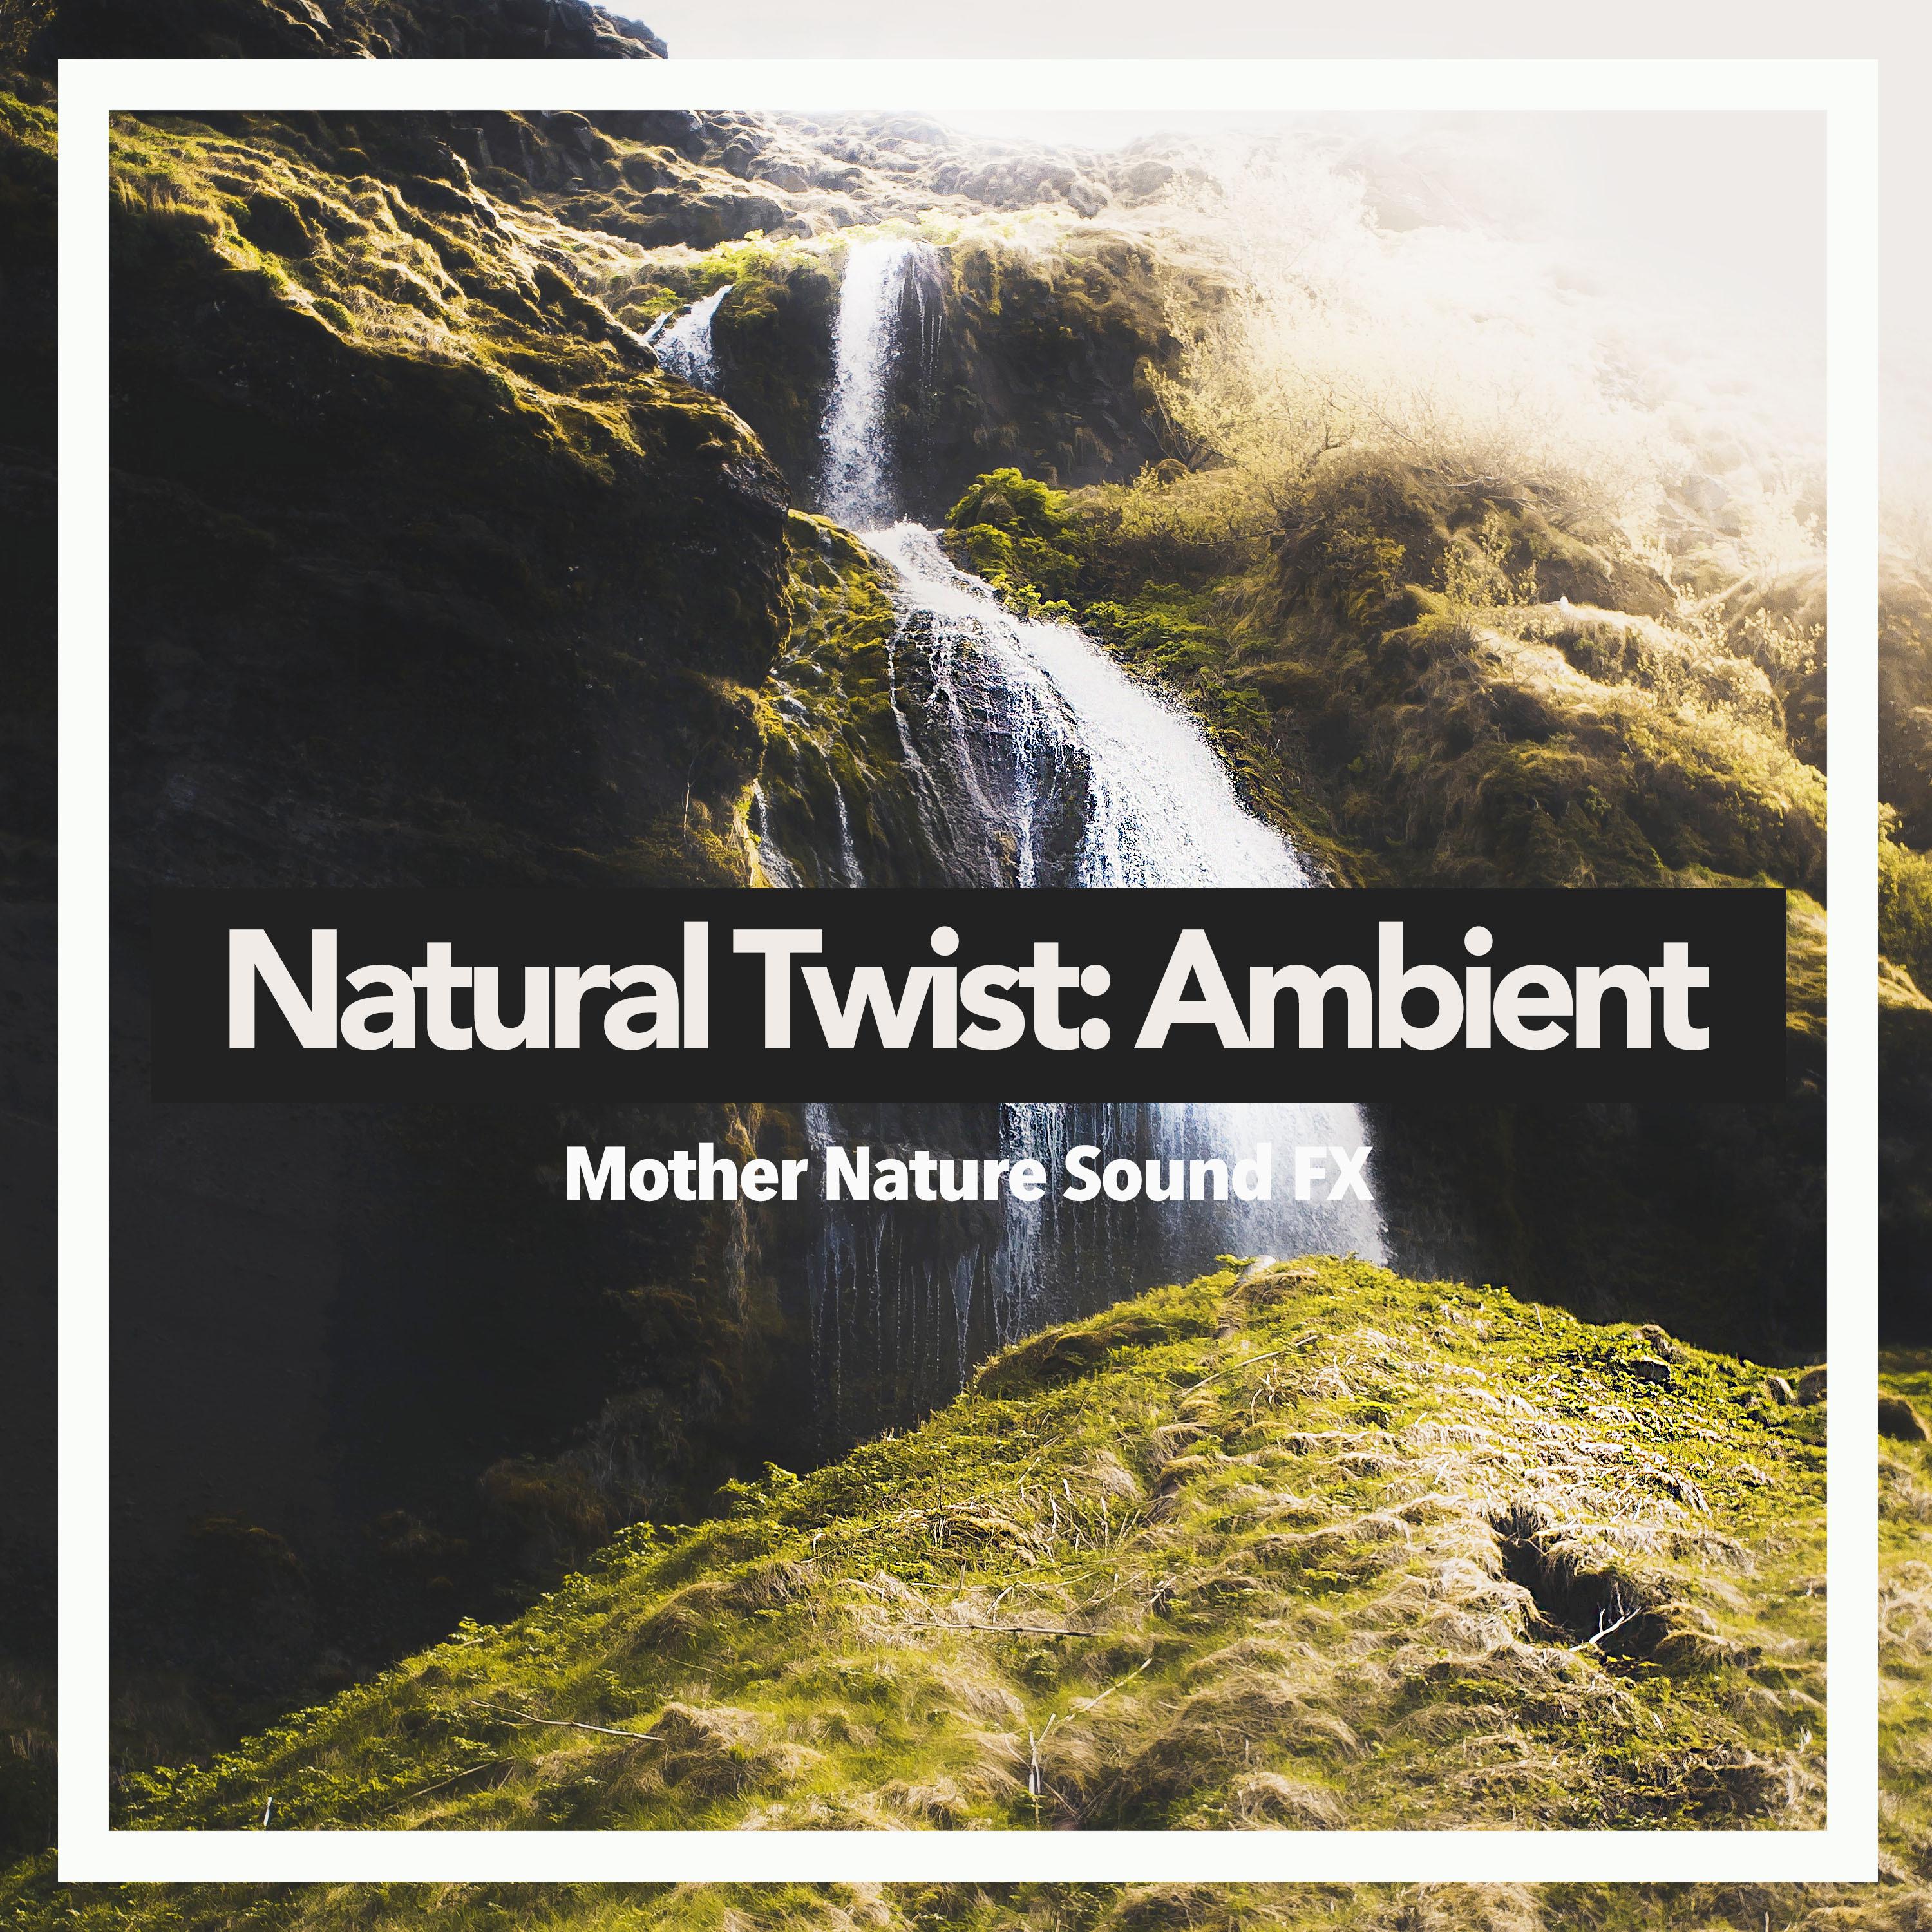 Natural Twist: Ambient